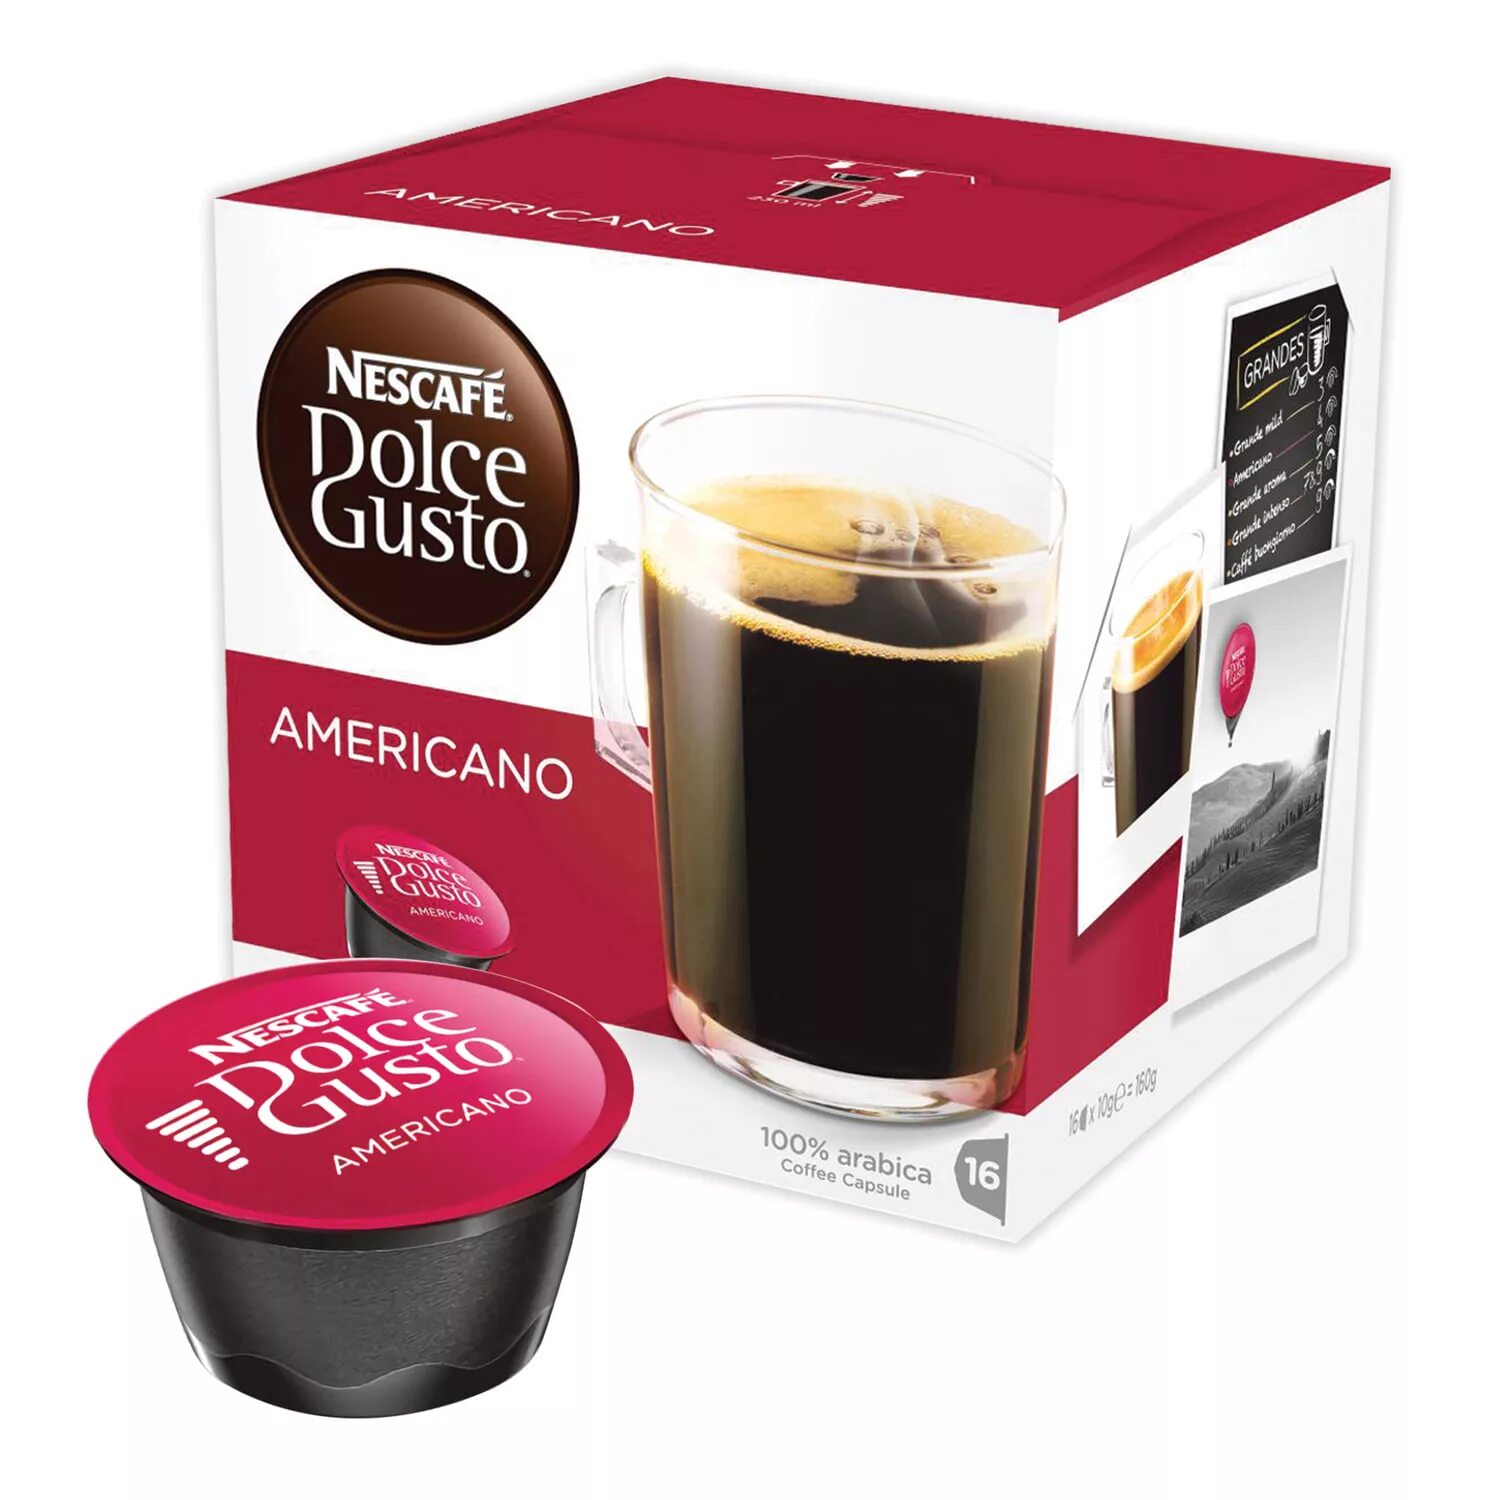 Nescafe капсулы купить. Дольче густо американо капсулы. Кофе в капсулах американо Дольче густо. Капсулы Нескафе Дольче густо американо. Dolce gusto капсулы.